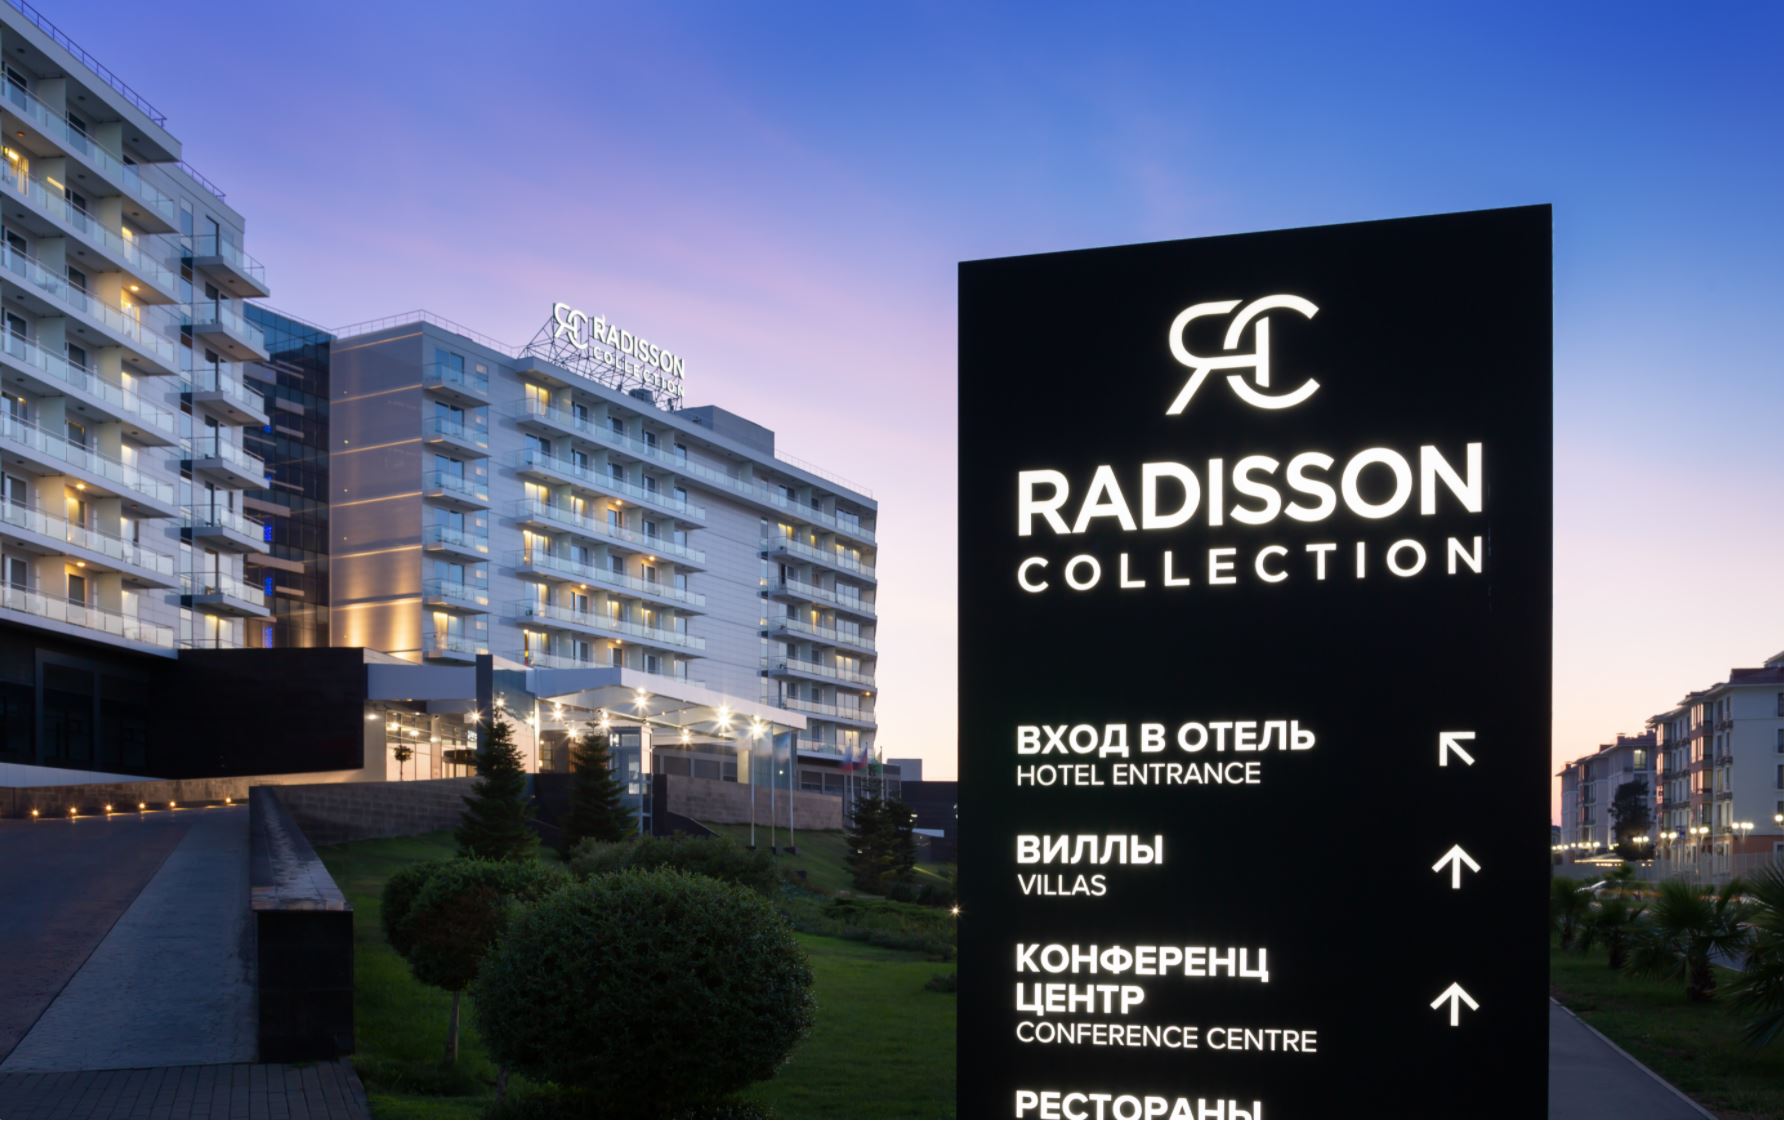 Отель Radisson Collection Paradise Resort & Spa, Sochi